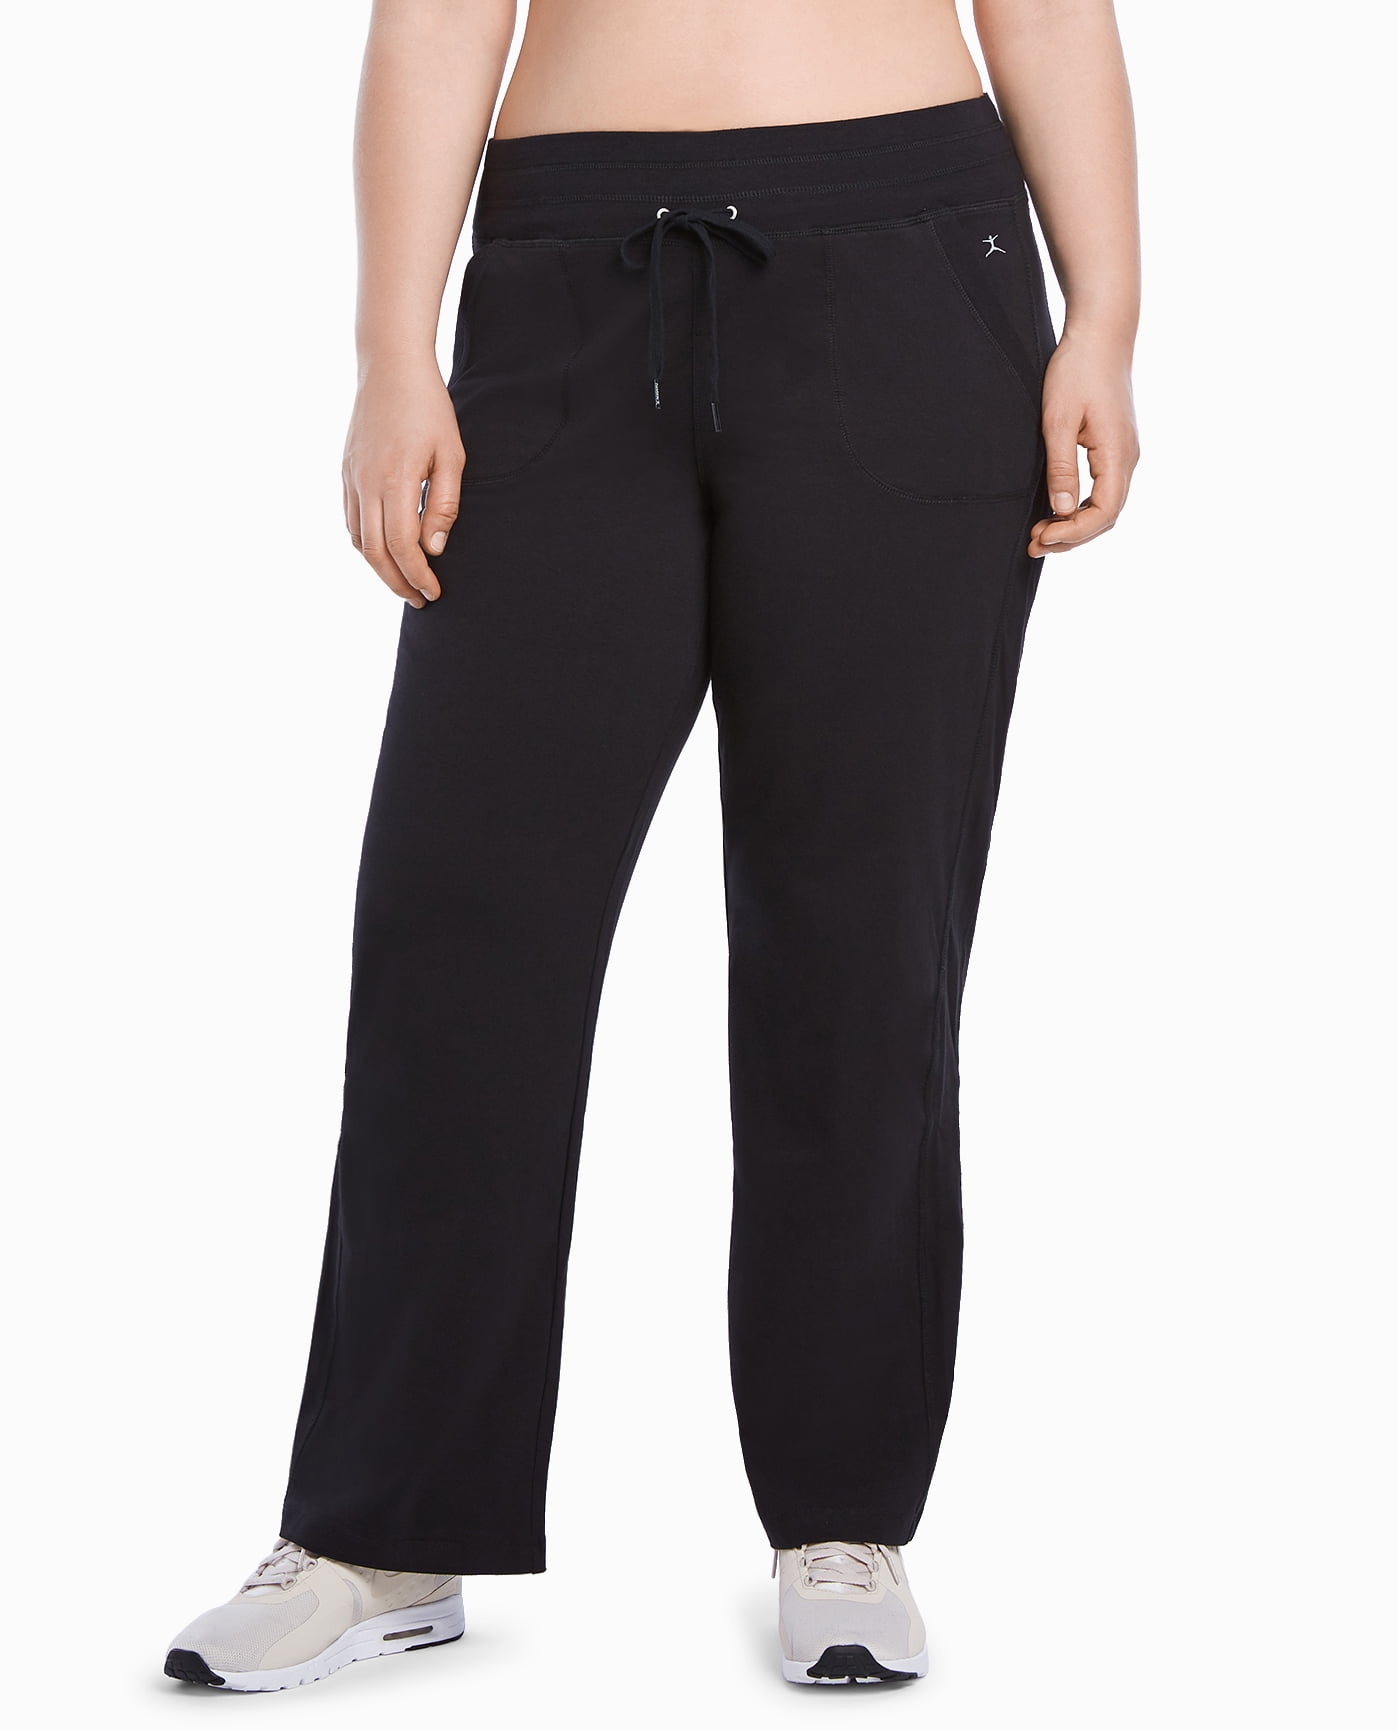 Danskin Plus Size Yoga Pants With Pockets